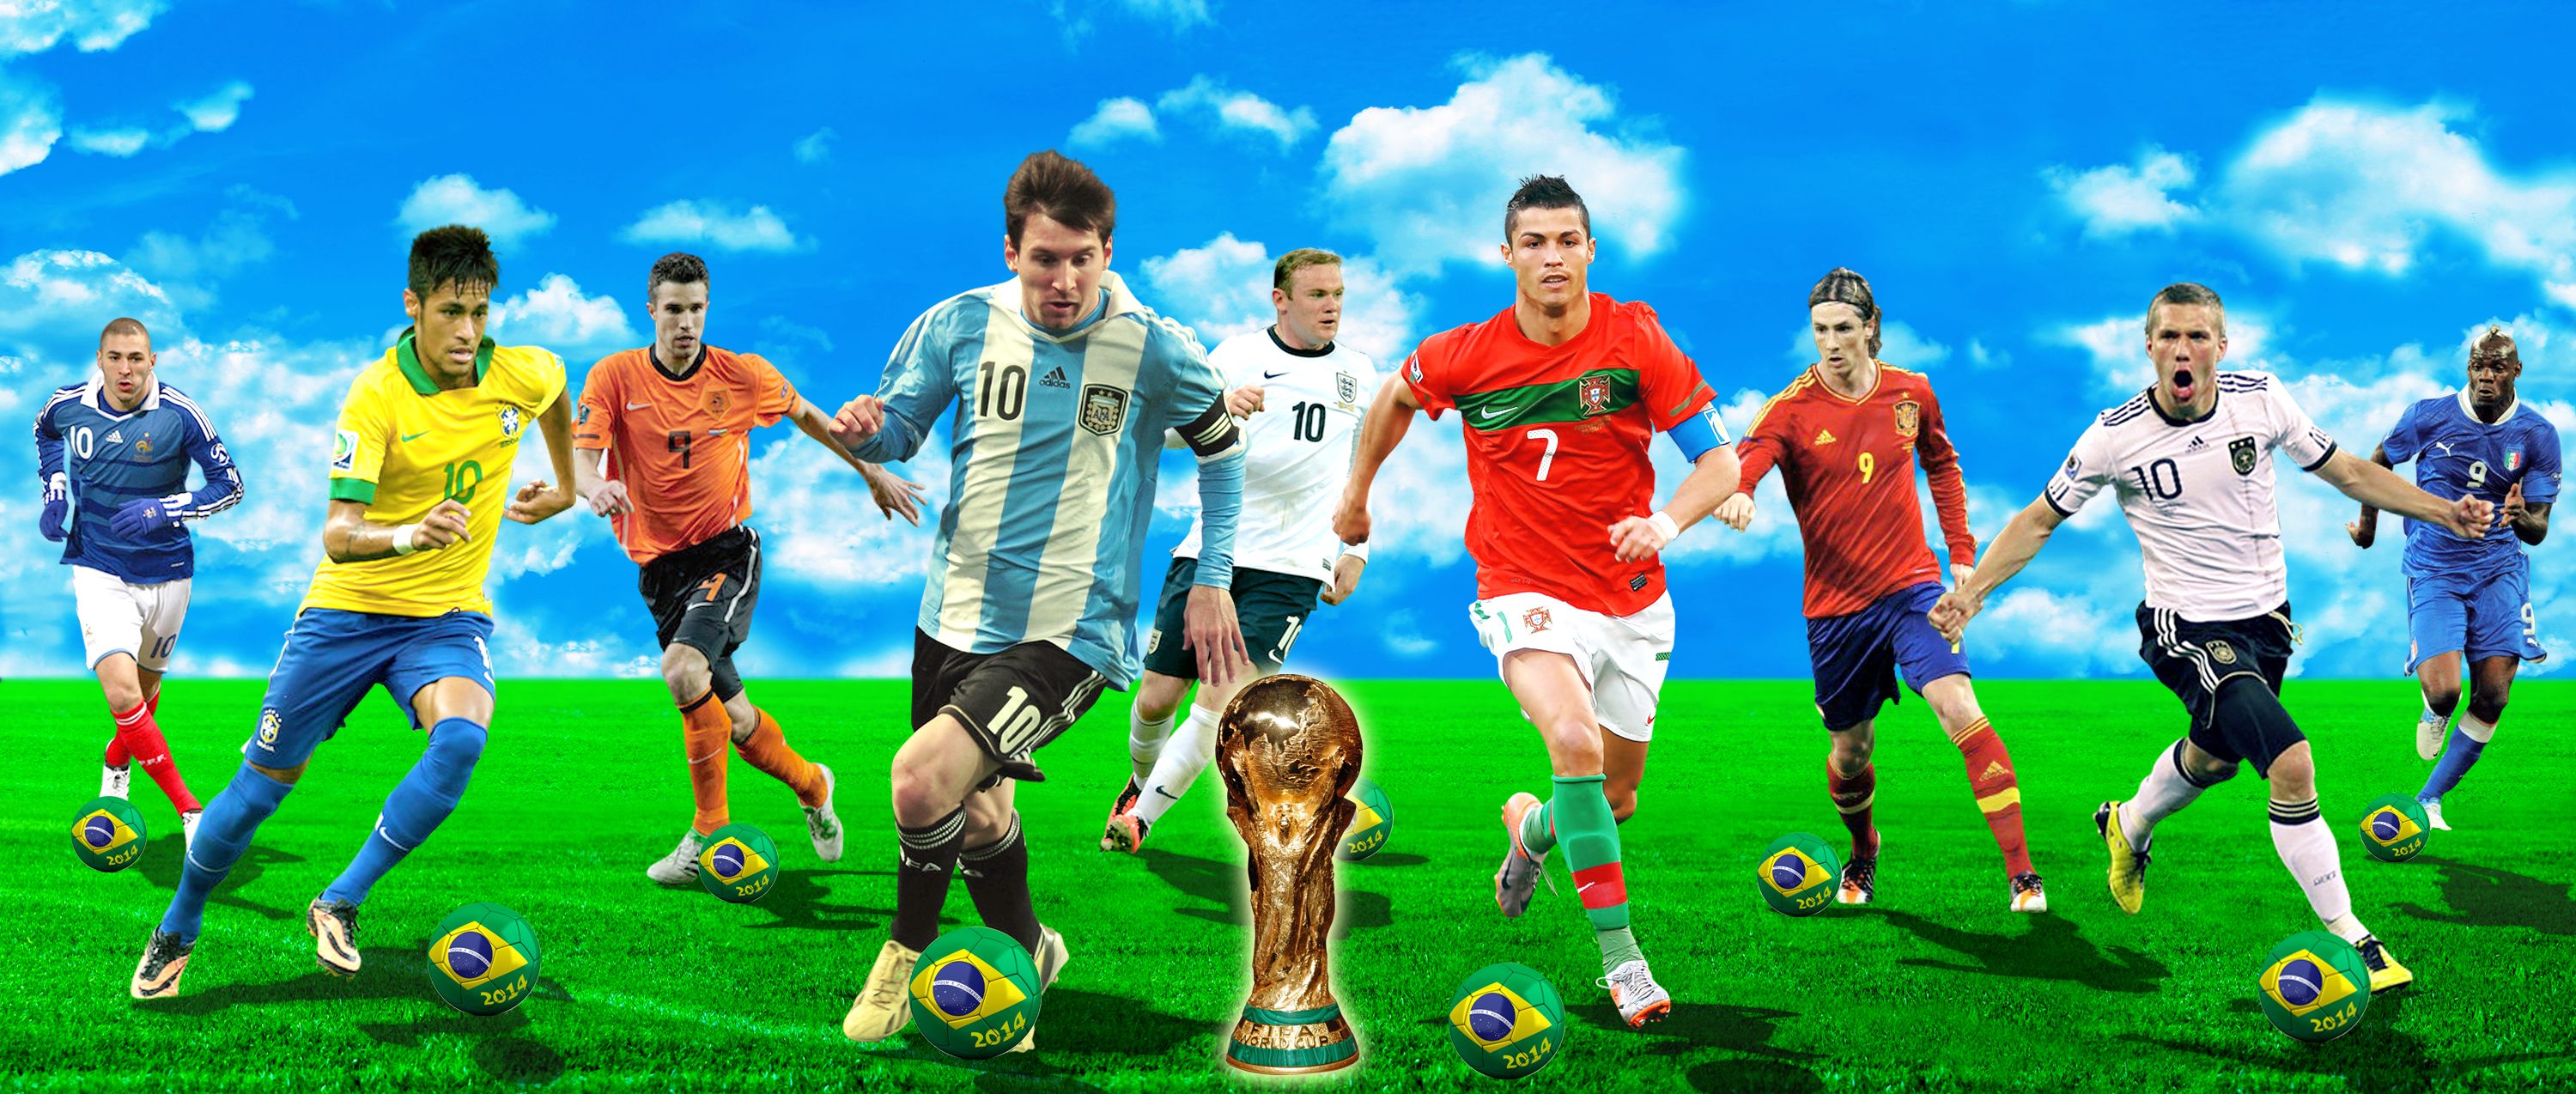 Soccer Legends Wallpapers  Top Free Soccer Legends Backgrounds   WallpaperAccess